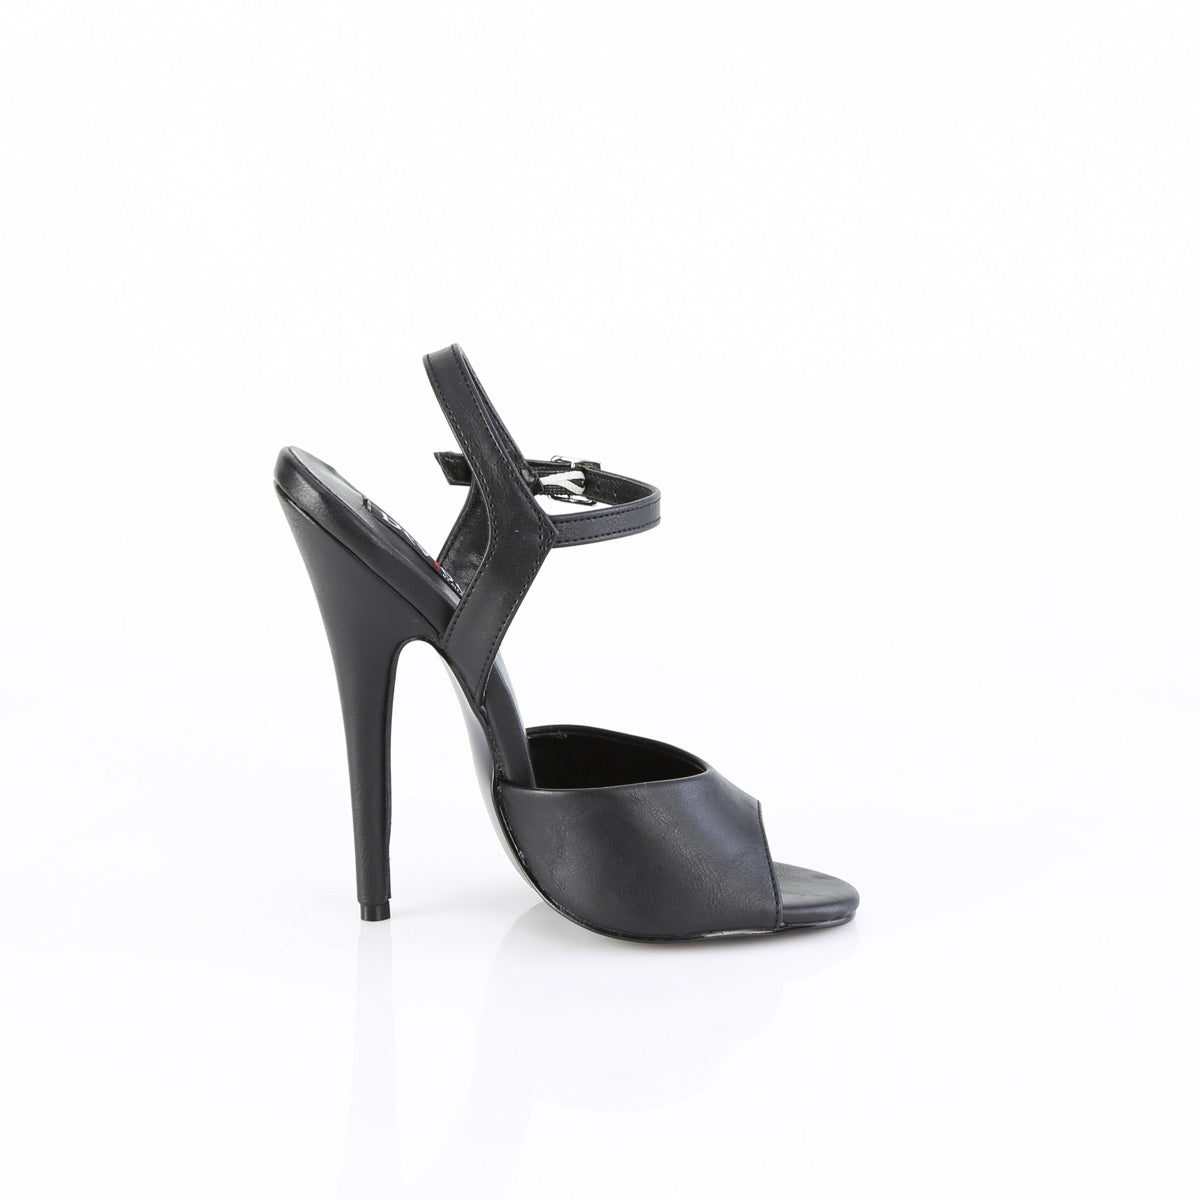 6" (152Mm) Stiletto Heel Ankle Strap Sandal Pleaser Devious DOMINA/109